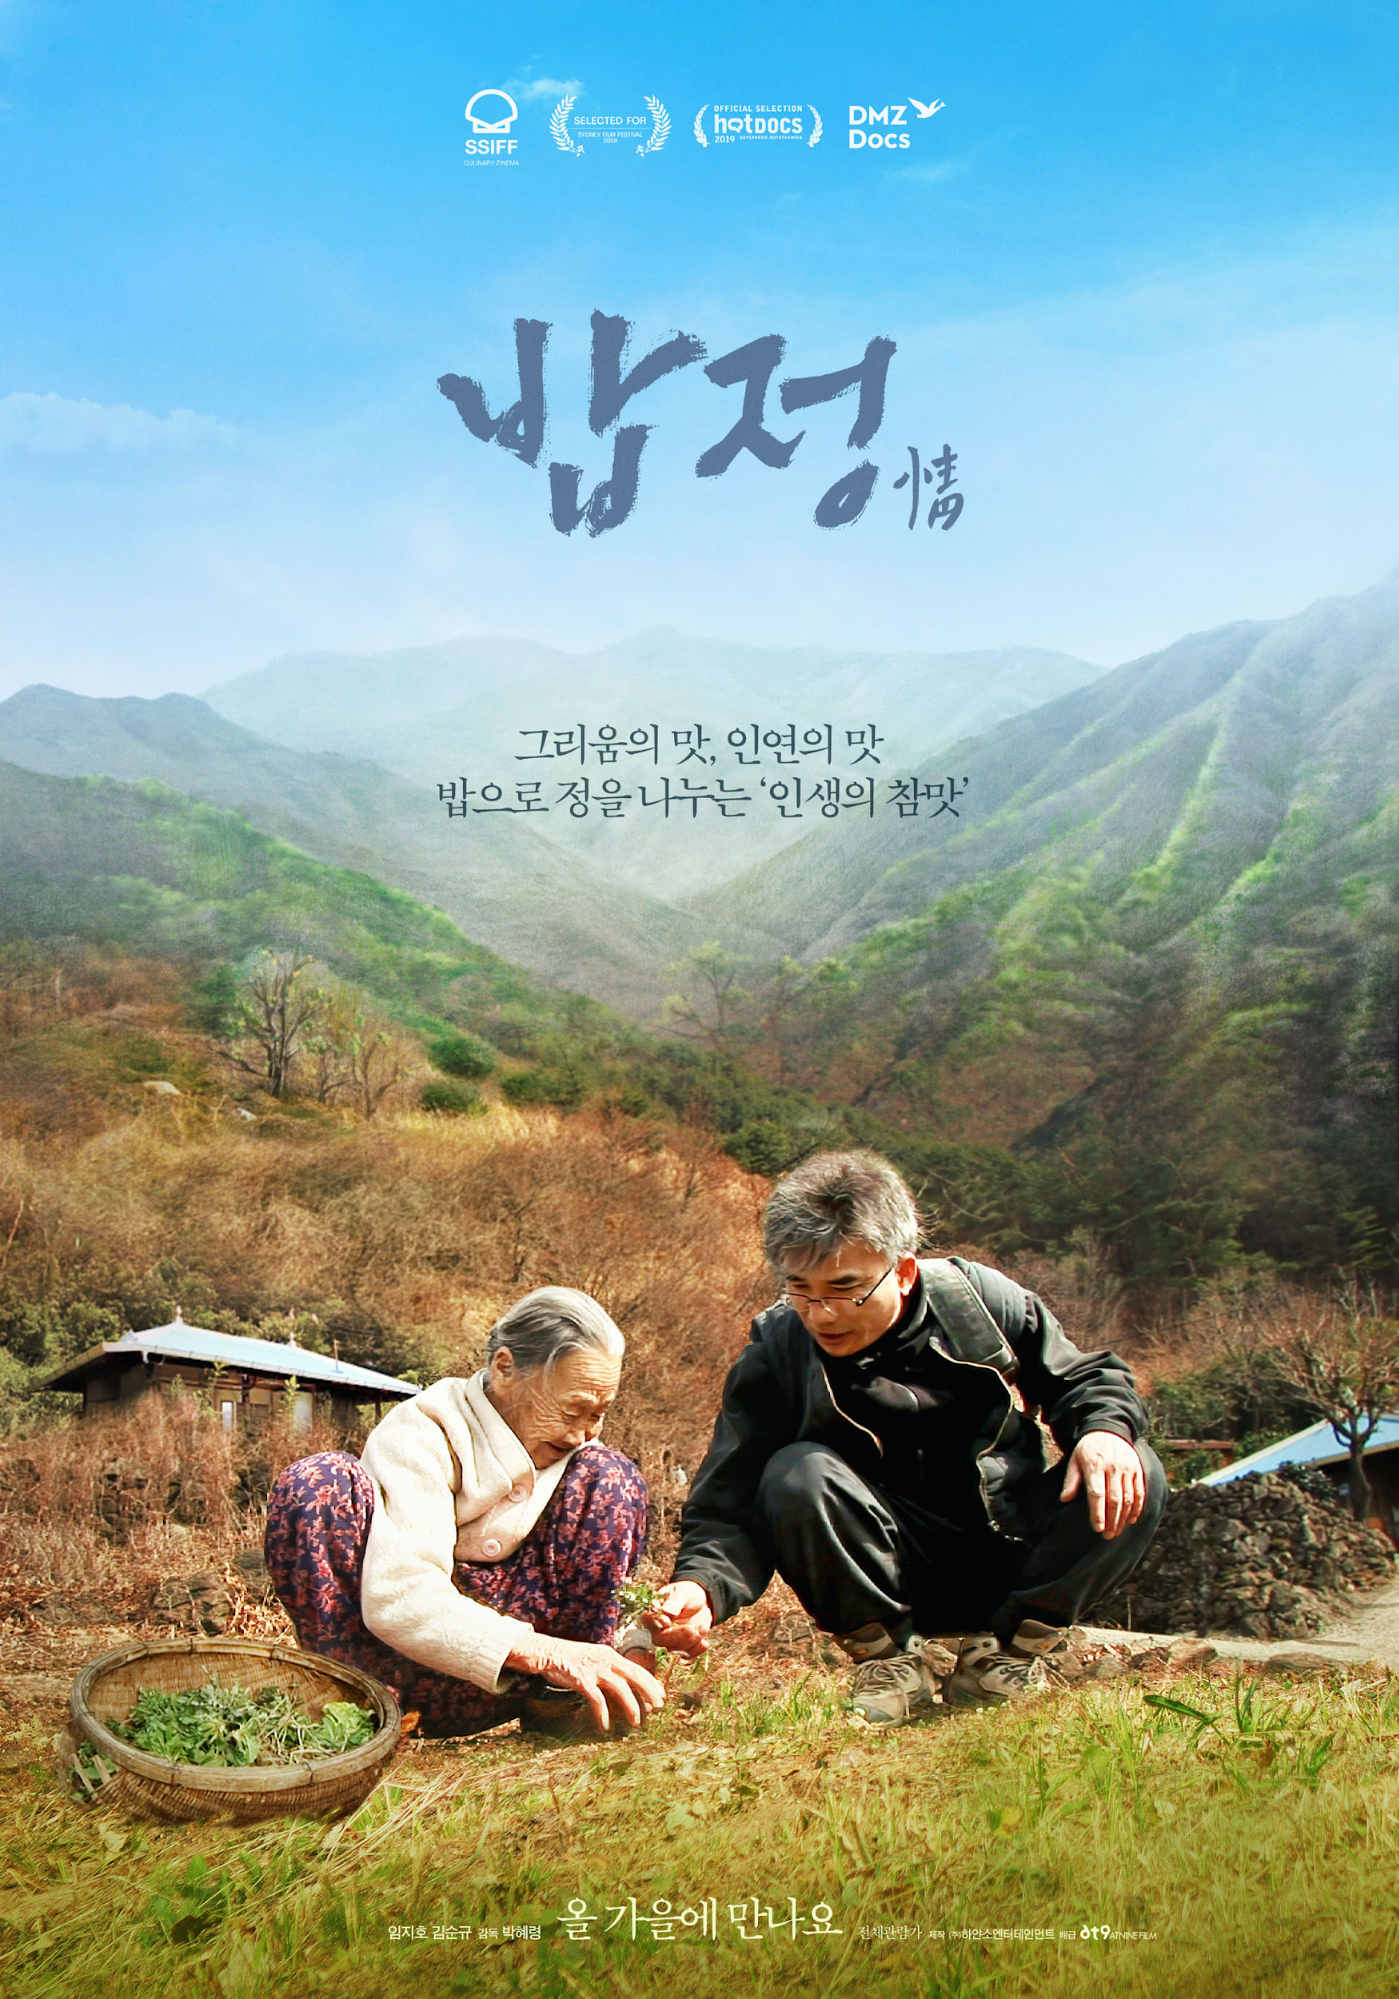 Upcoming Korean Movies - The Wandering Chef 밥정